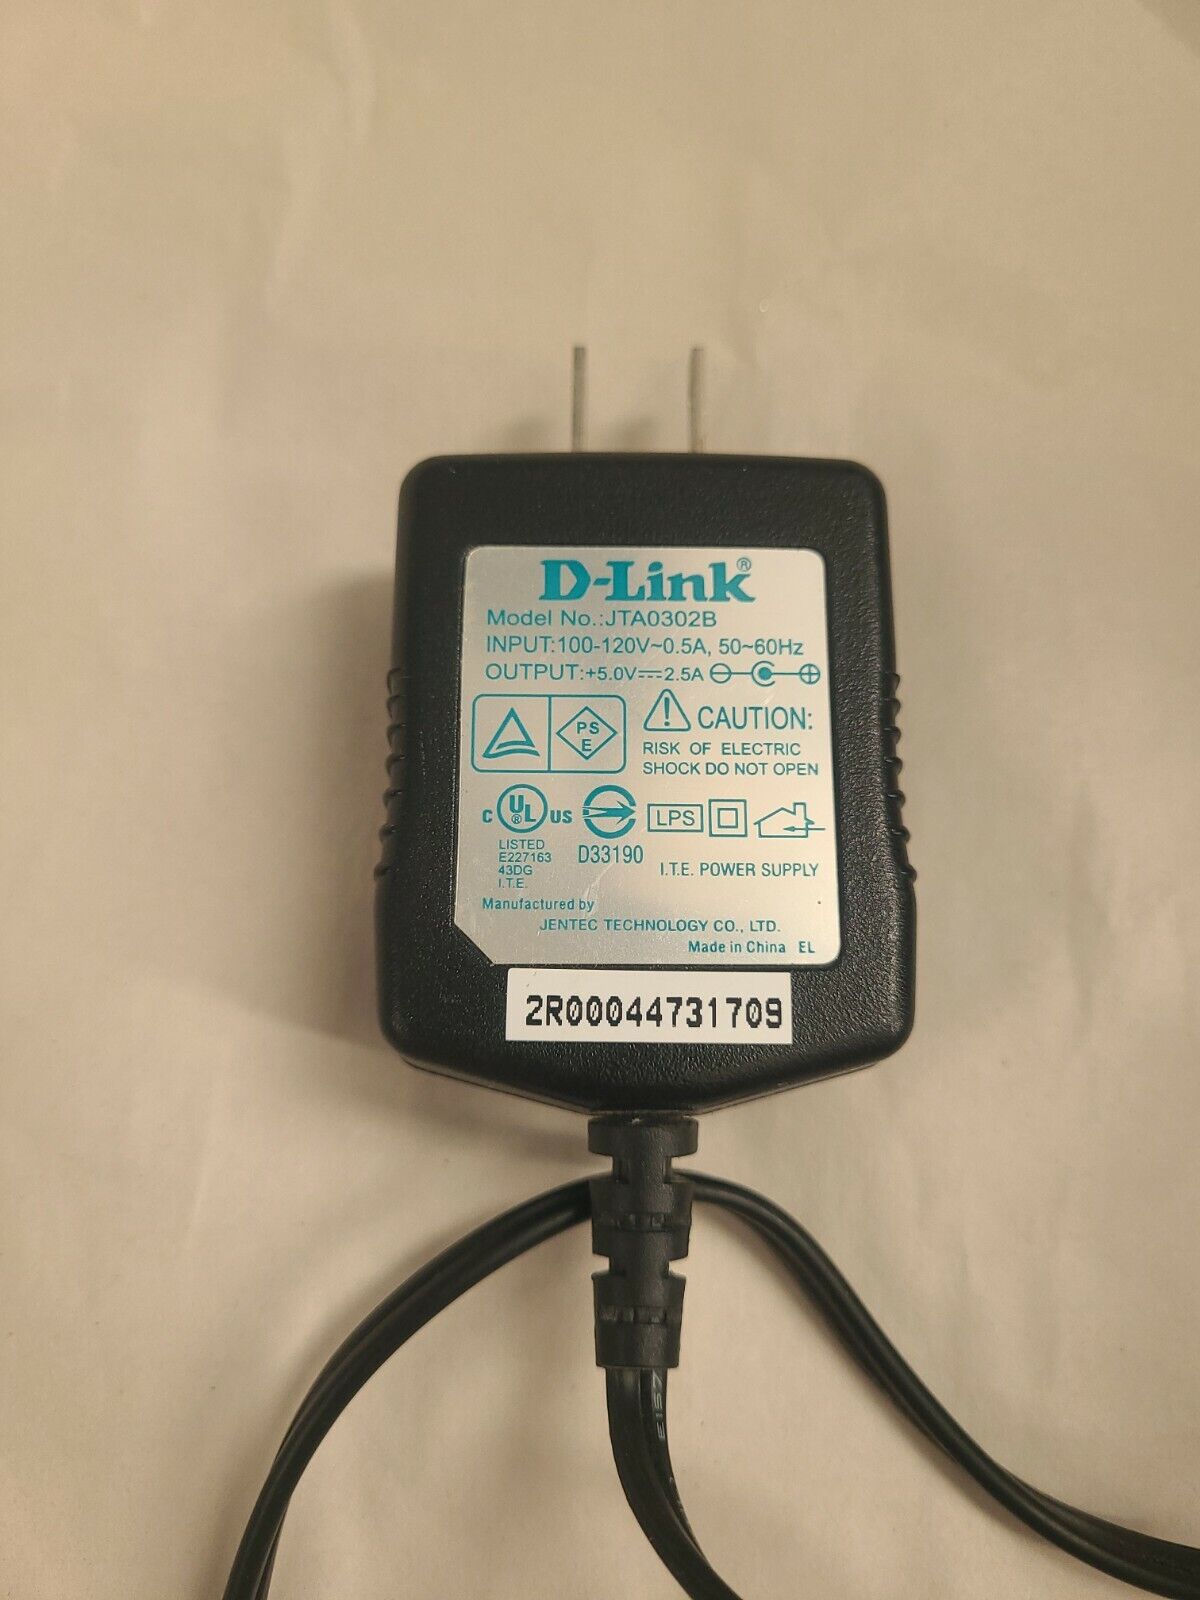 *Brand NEW*Model No JTA0302B D-Link 5.0v 2.5A AC/DC ADAPTER 100 - 120 Volt Wall Plug Power Supply